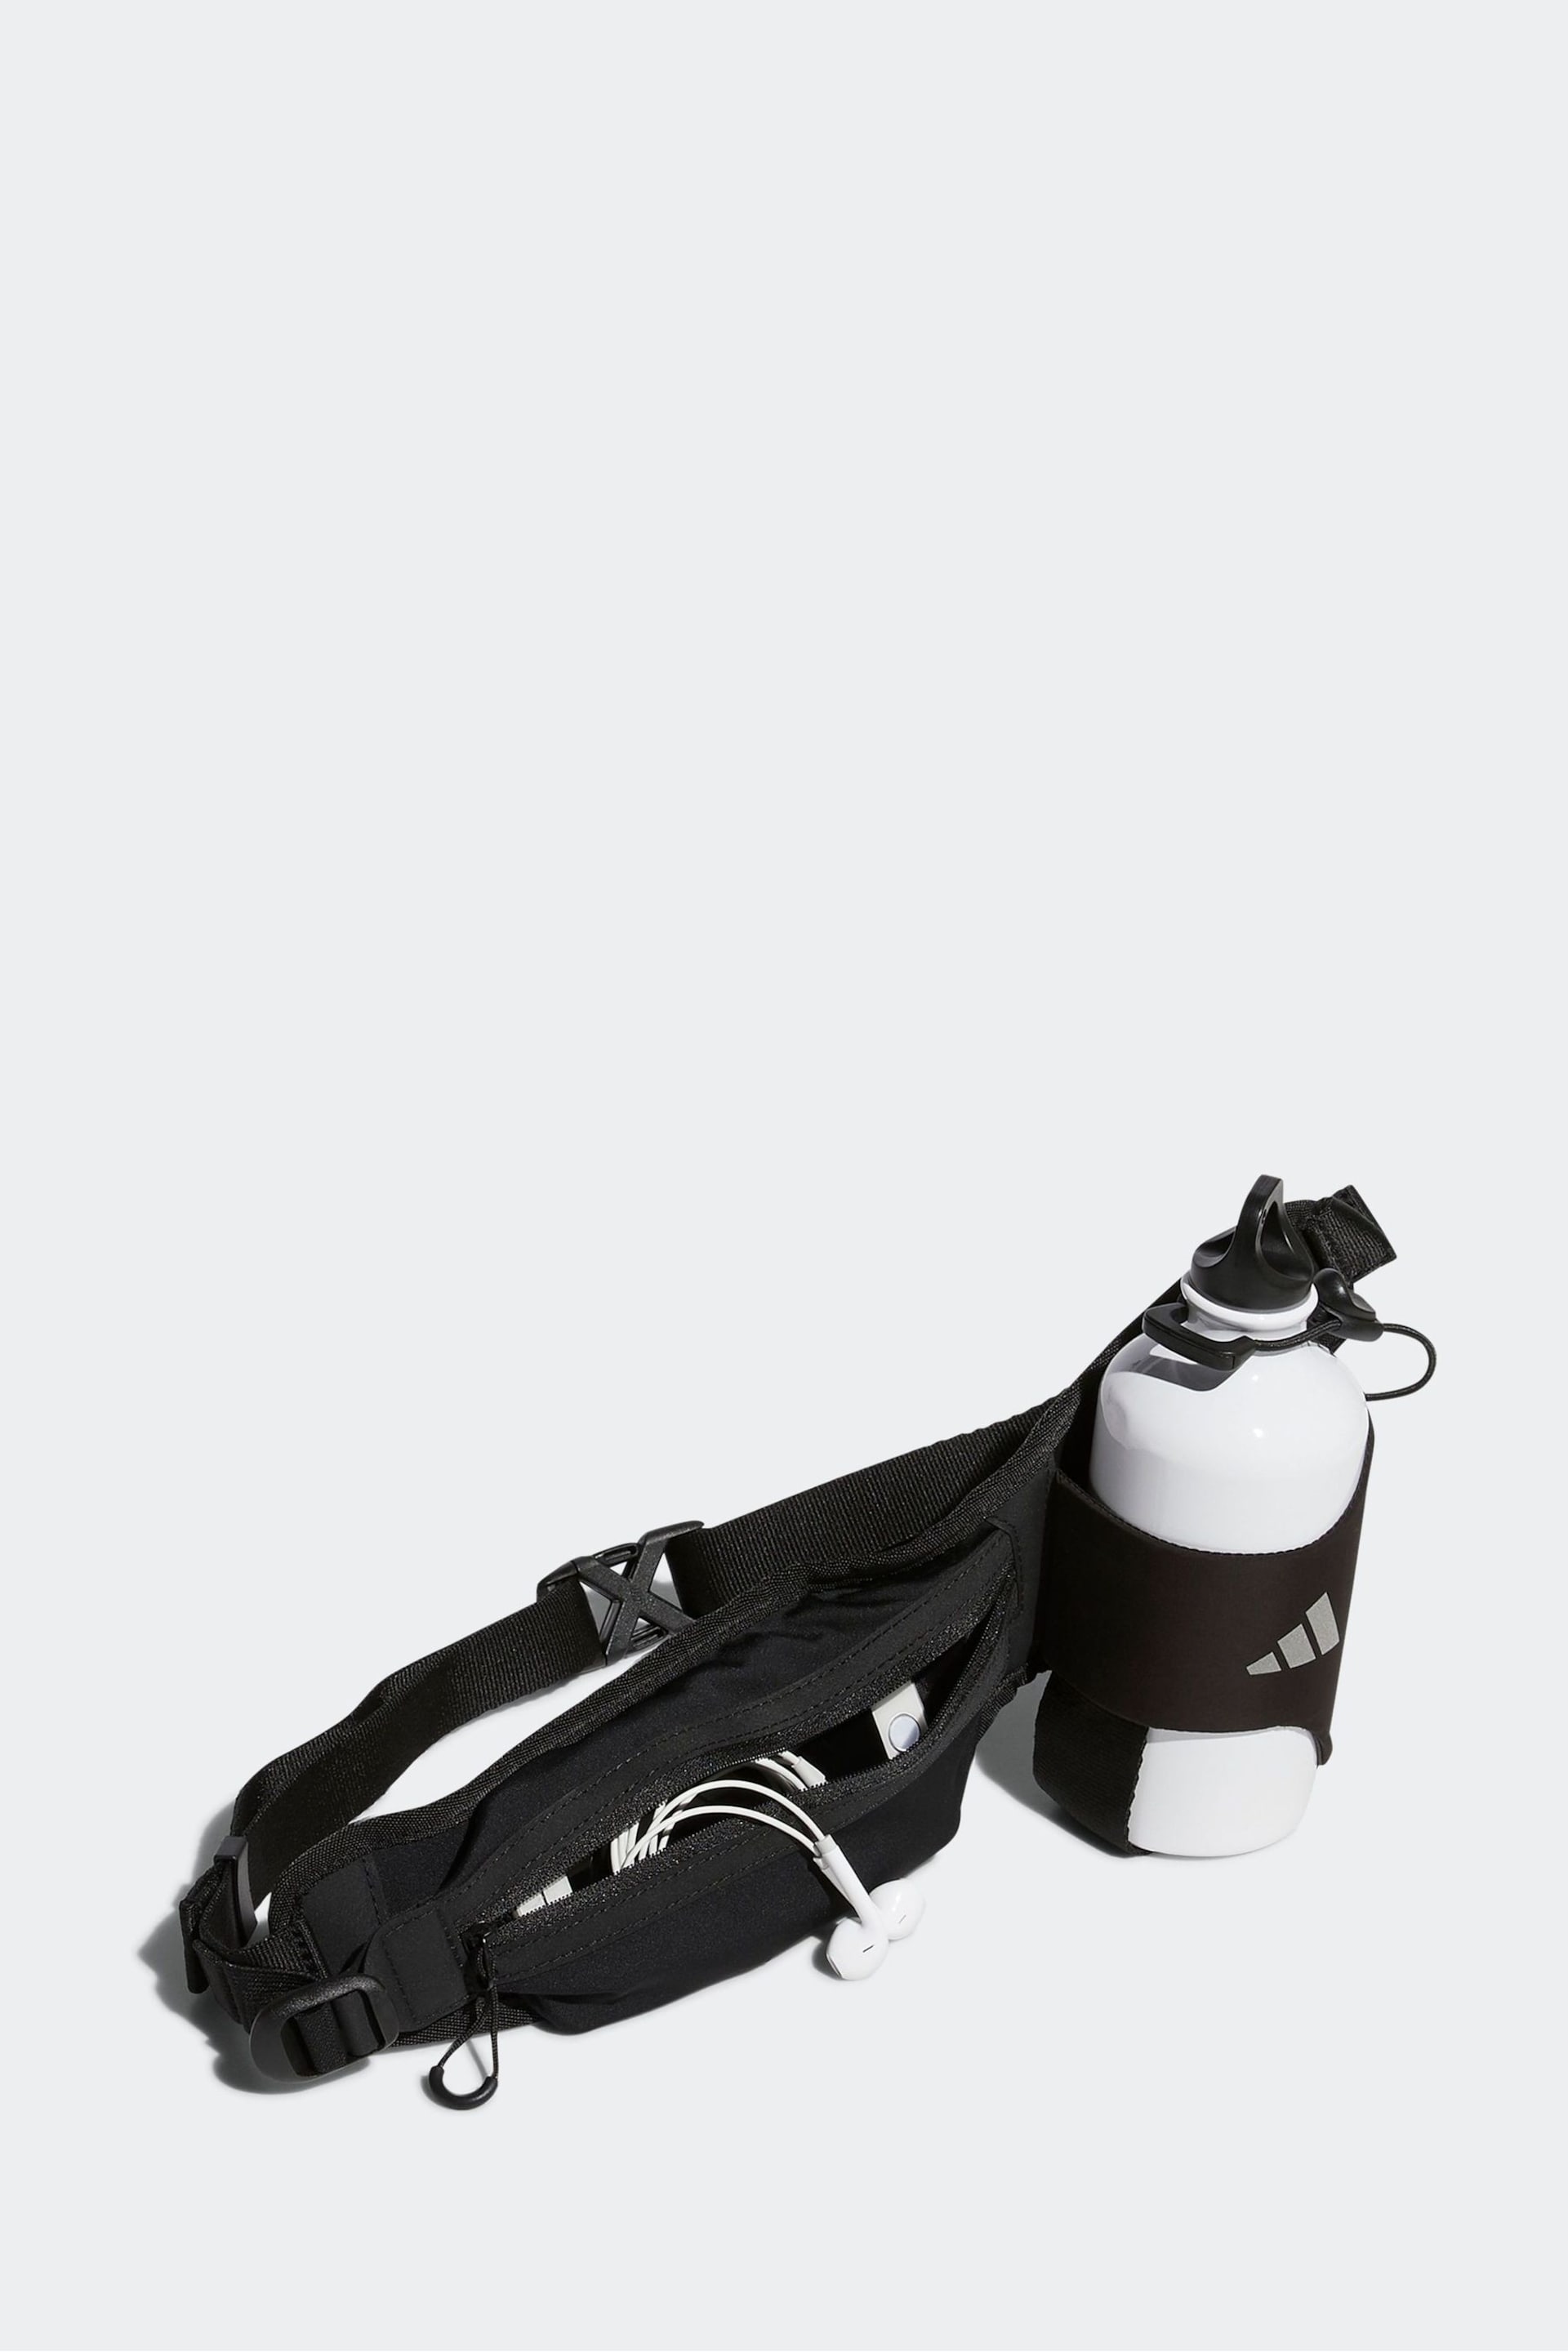 adidas Black Running Bottle Bag - Image 3 of 5